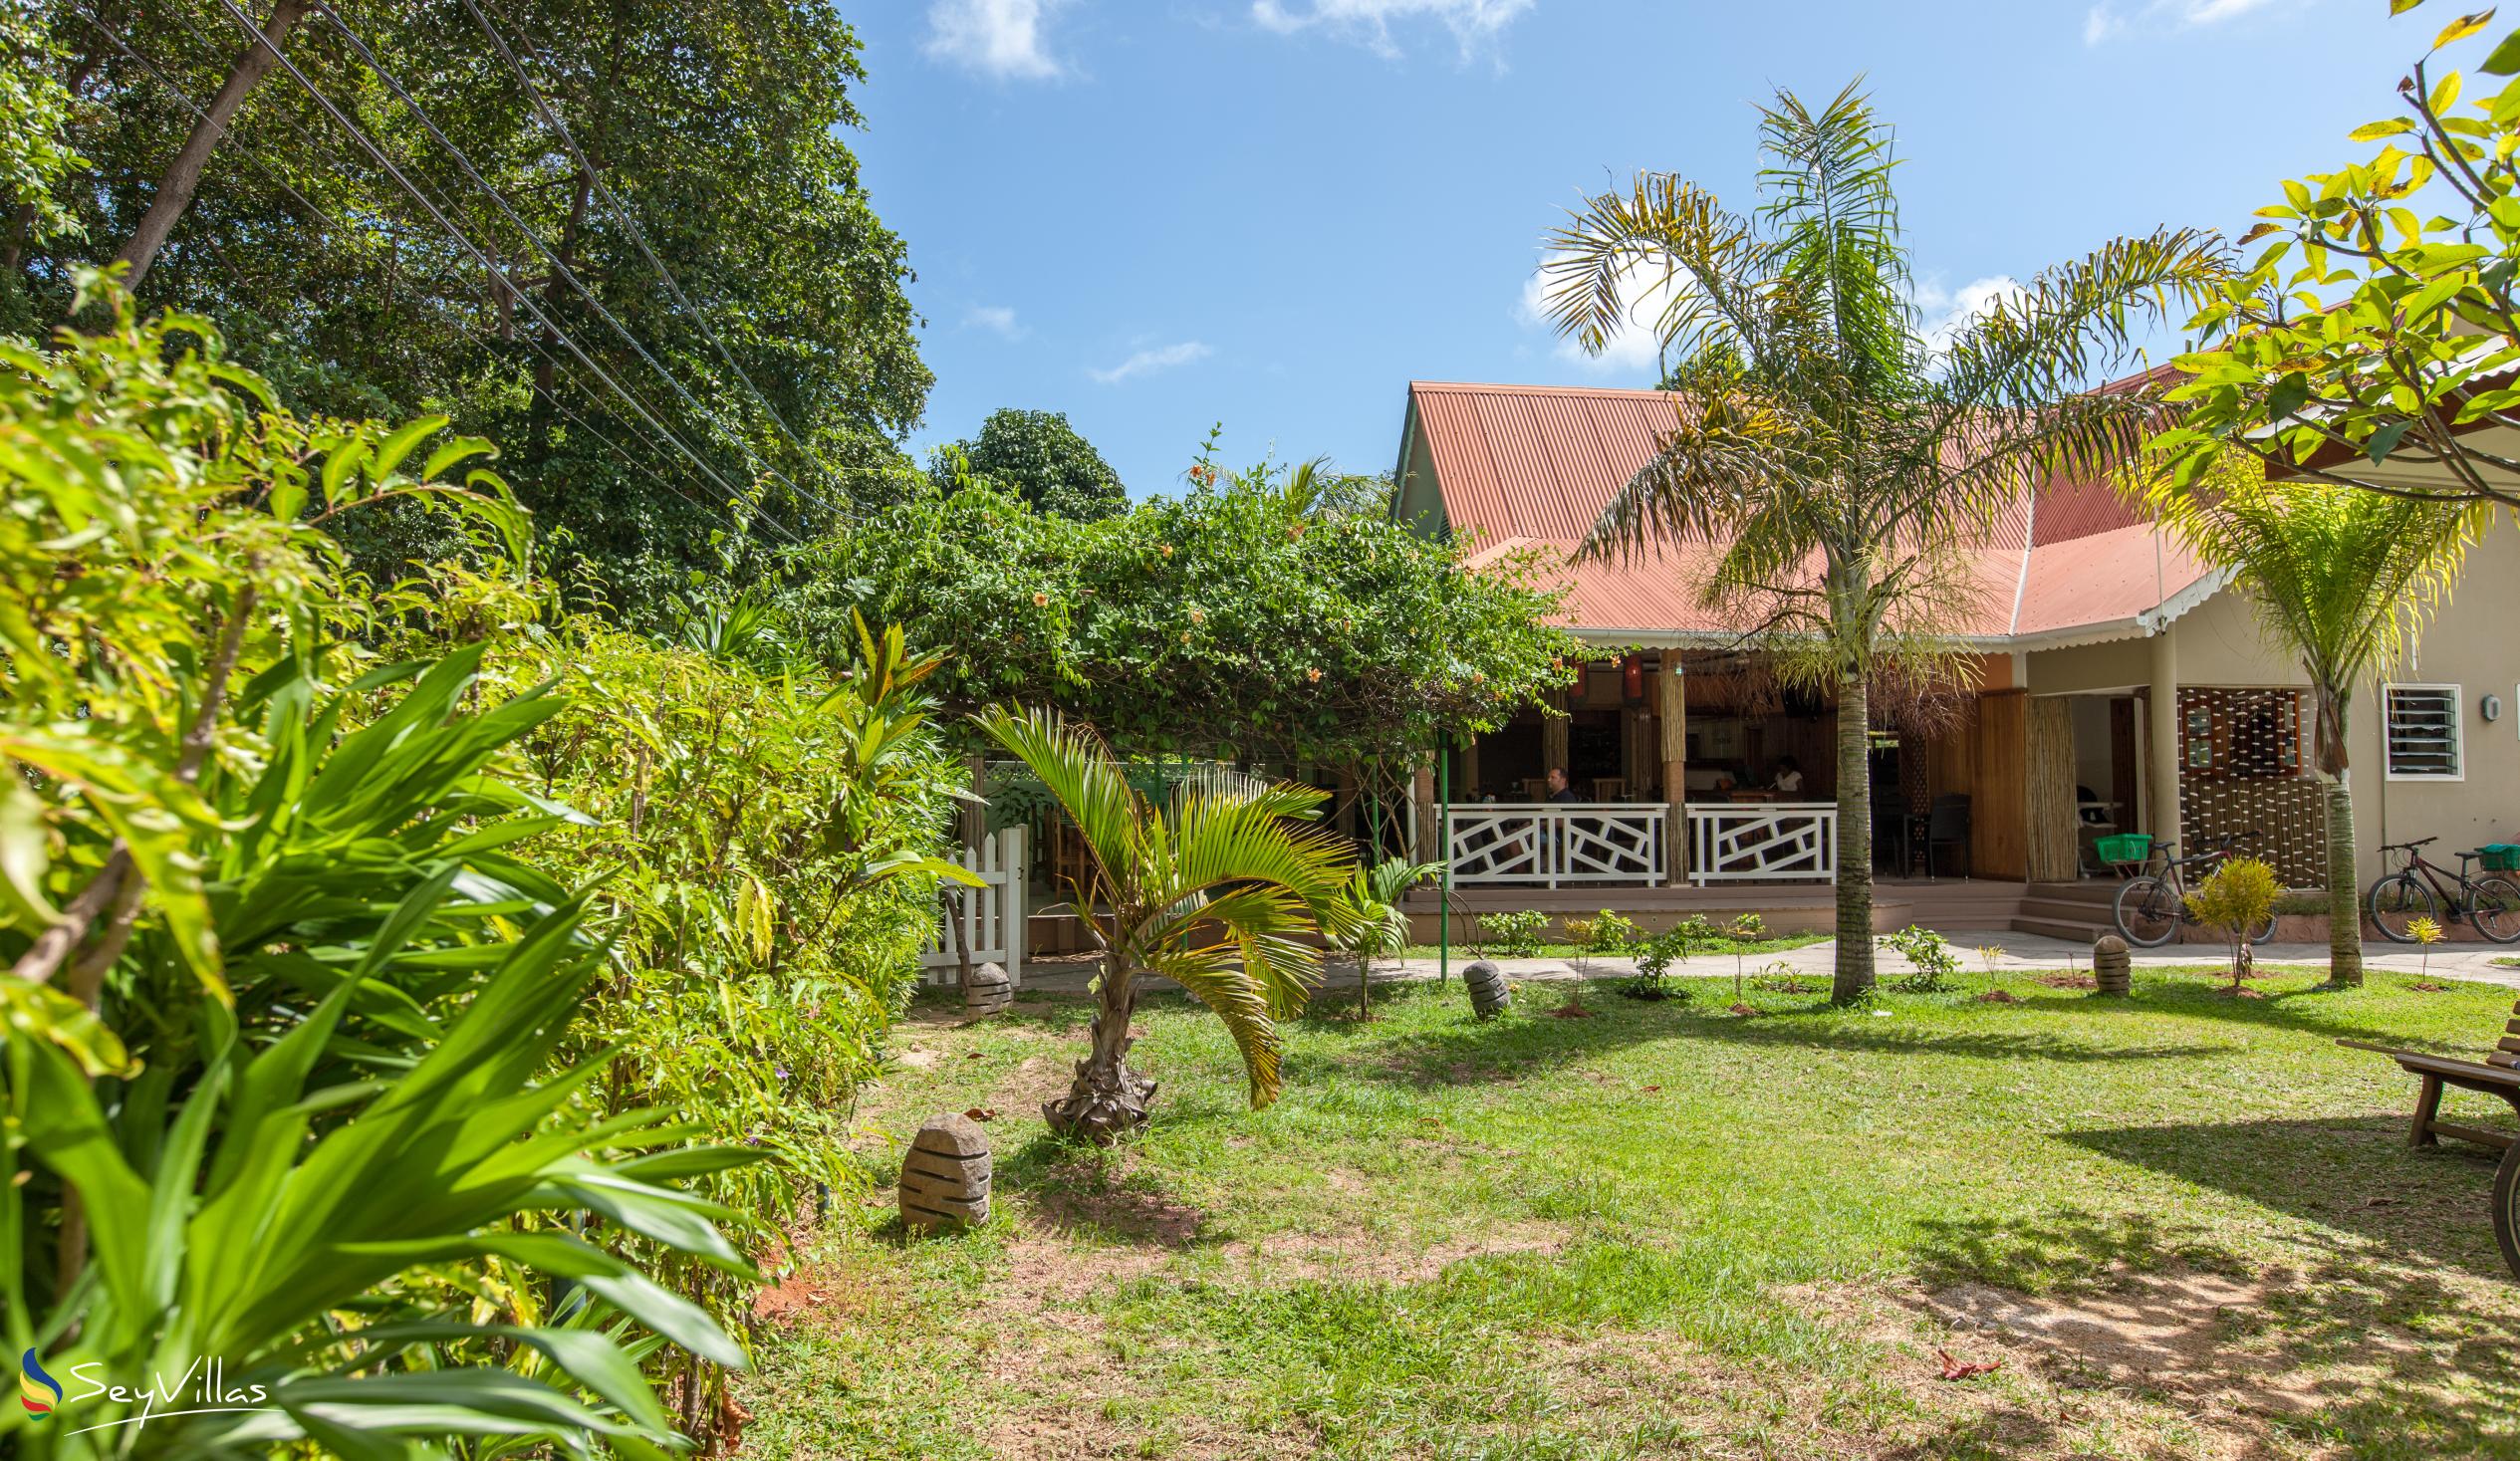 Photo 3: Villa Authentique - Outdoor area - La Digue (Seychelles)